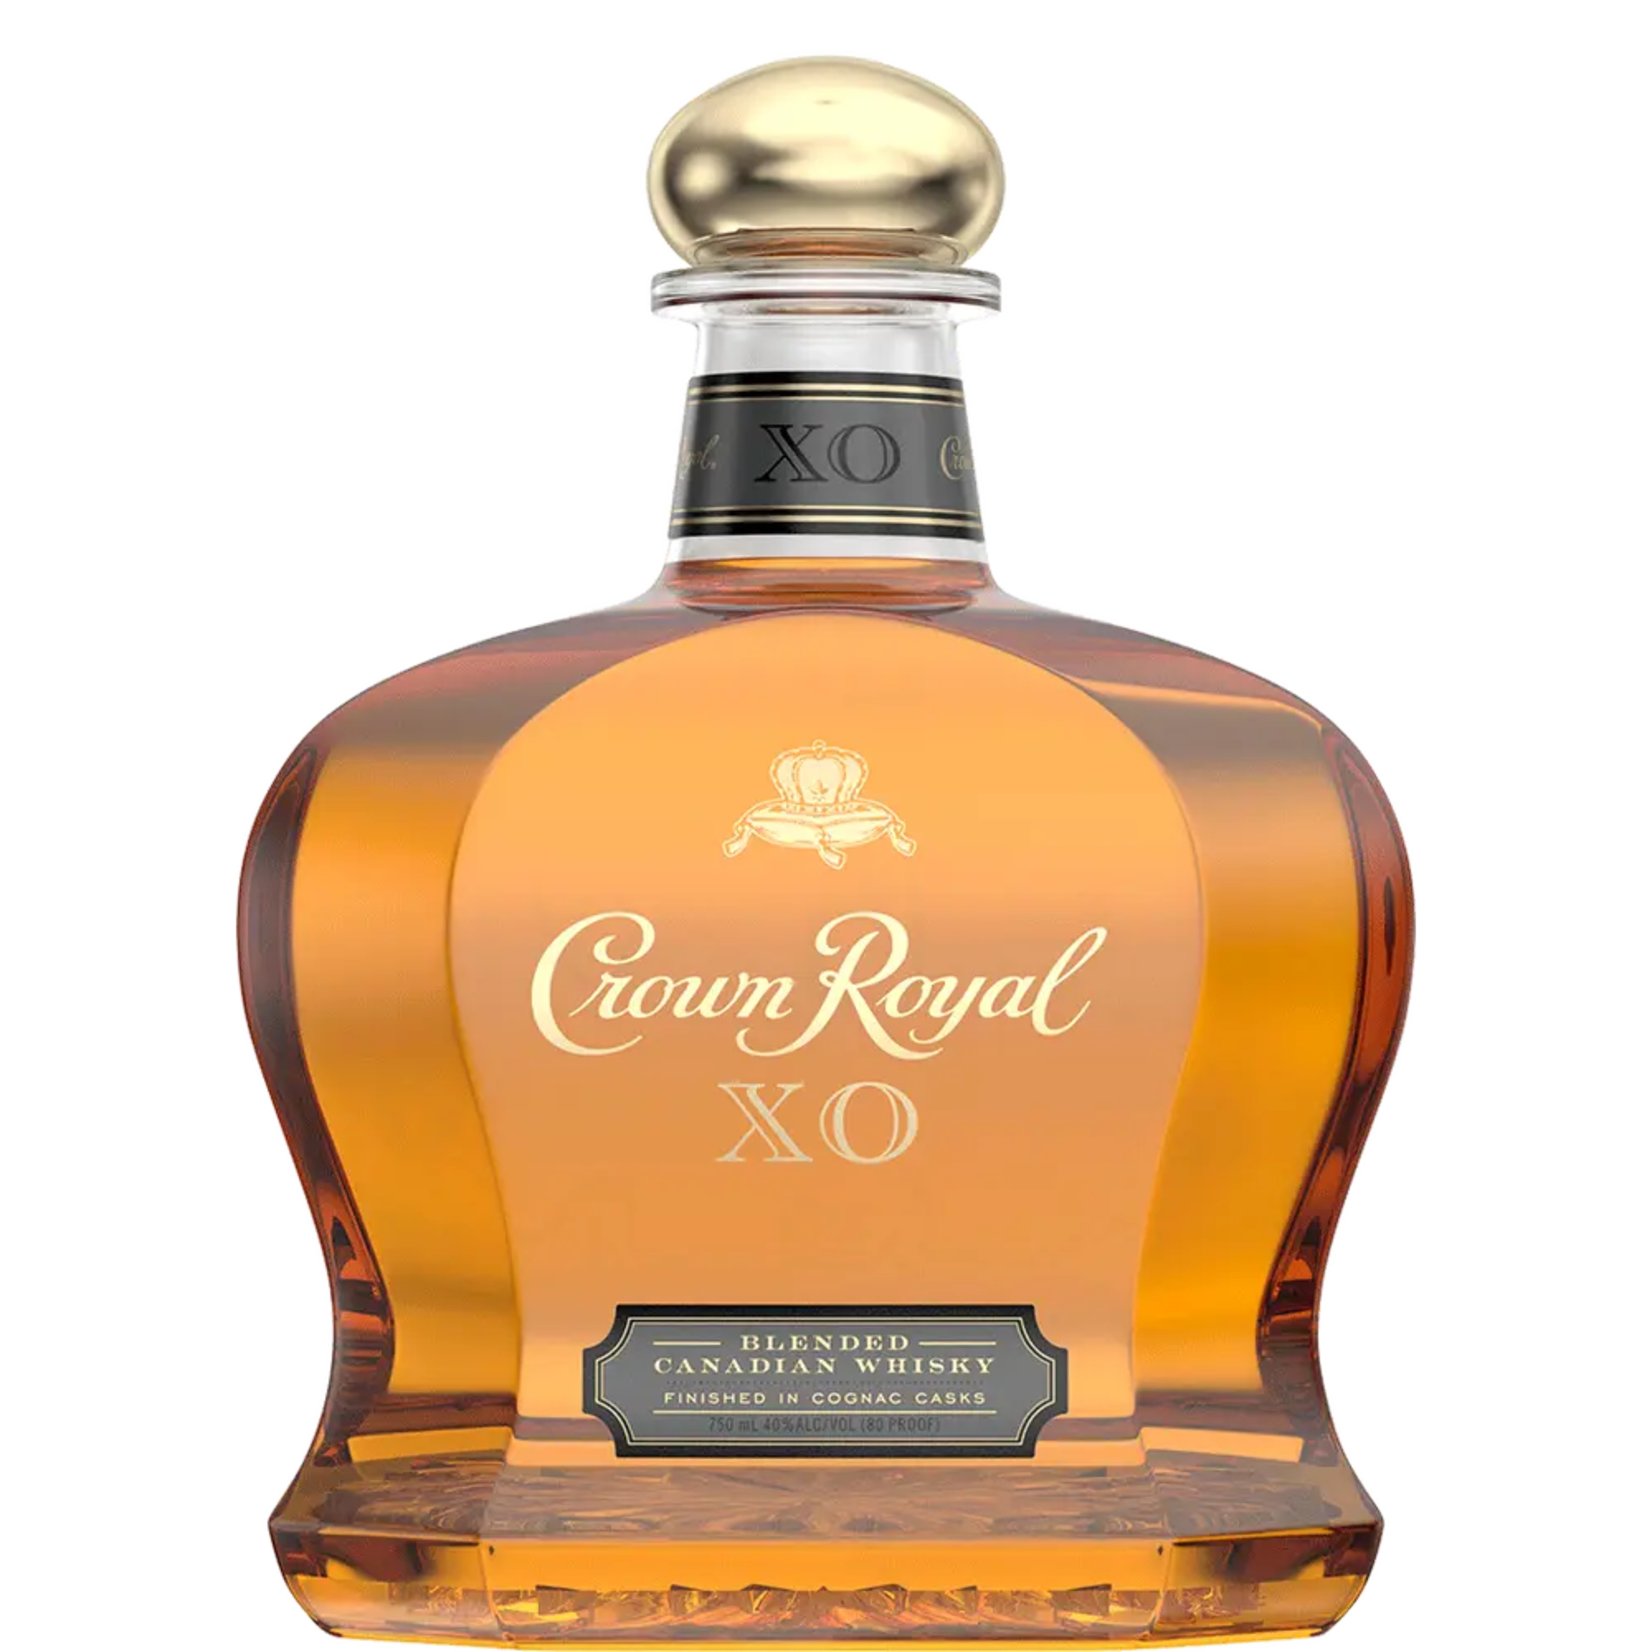 Crown Royal Crown Royal Canadian Whisky Xo 80Proof W/ Bag & Box 750ml